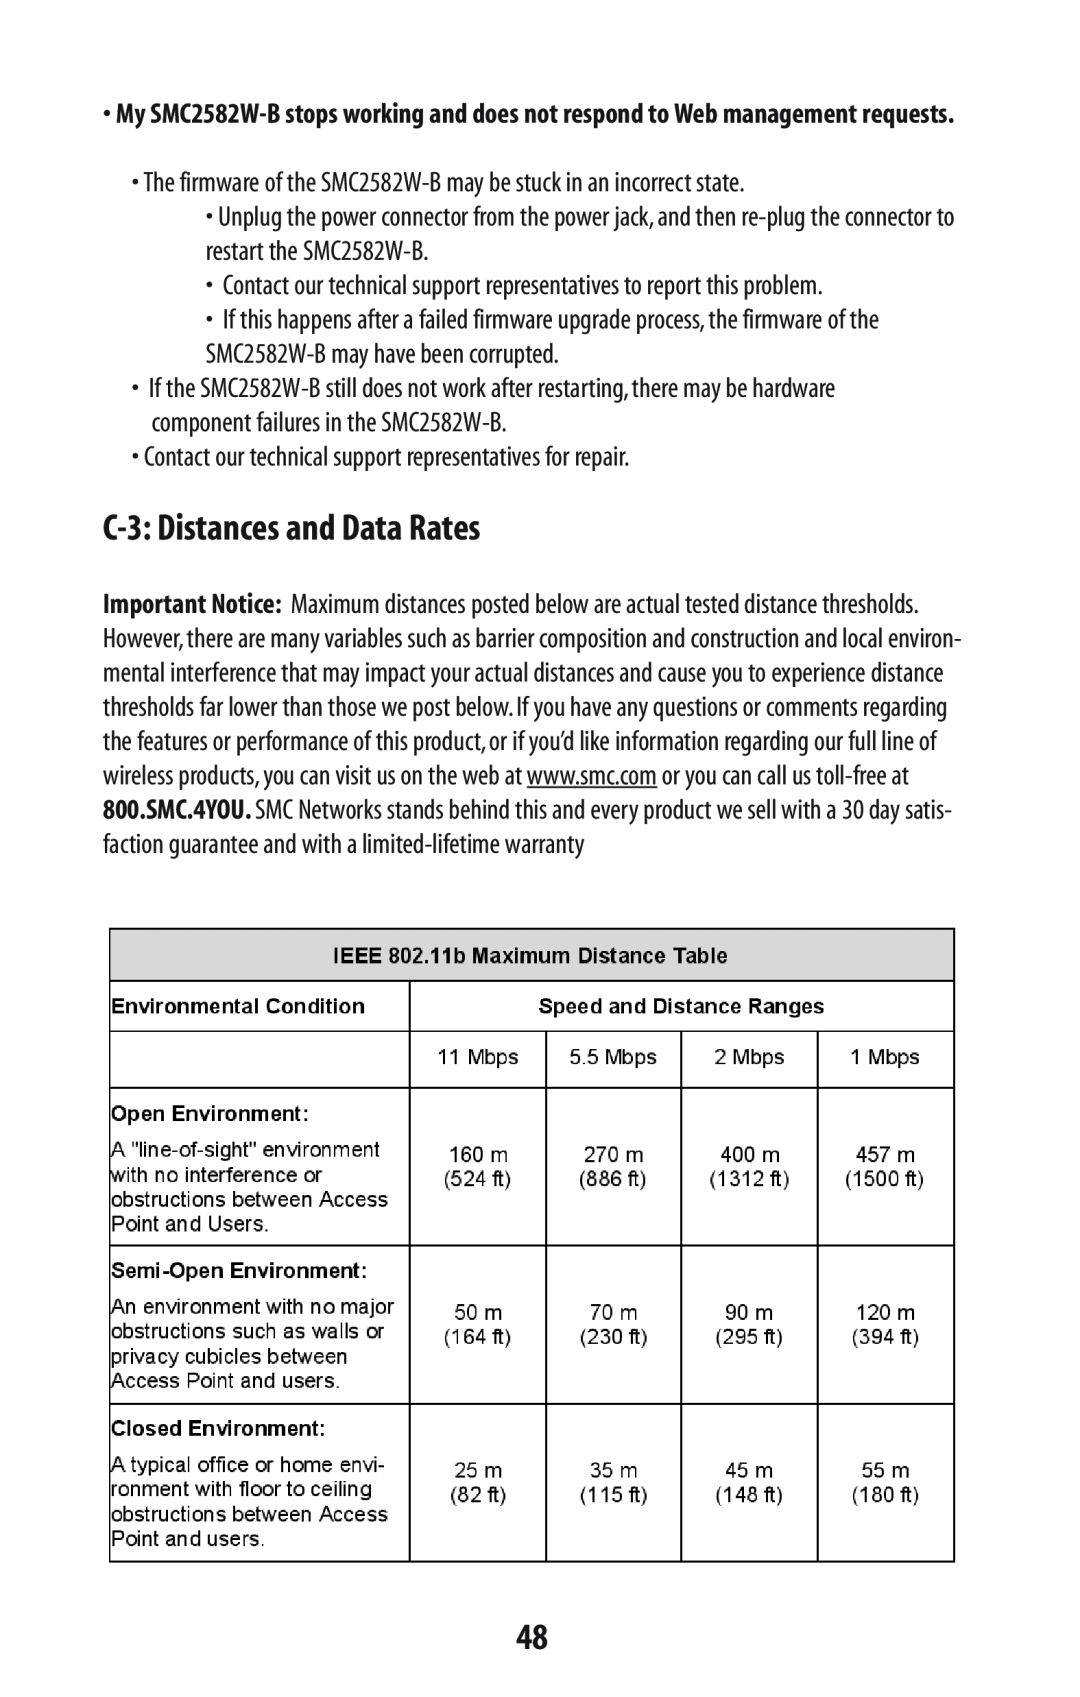 SMC Networks SMC2582W-B manual C-3 Distances and Data Rates 